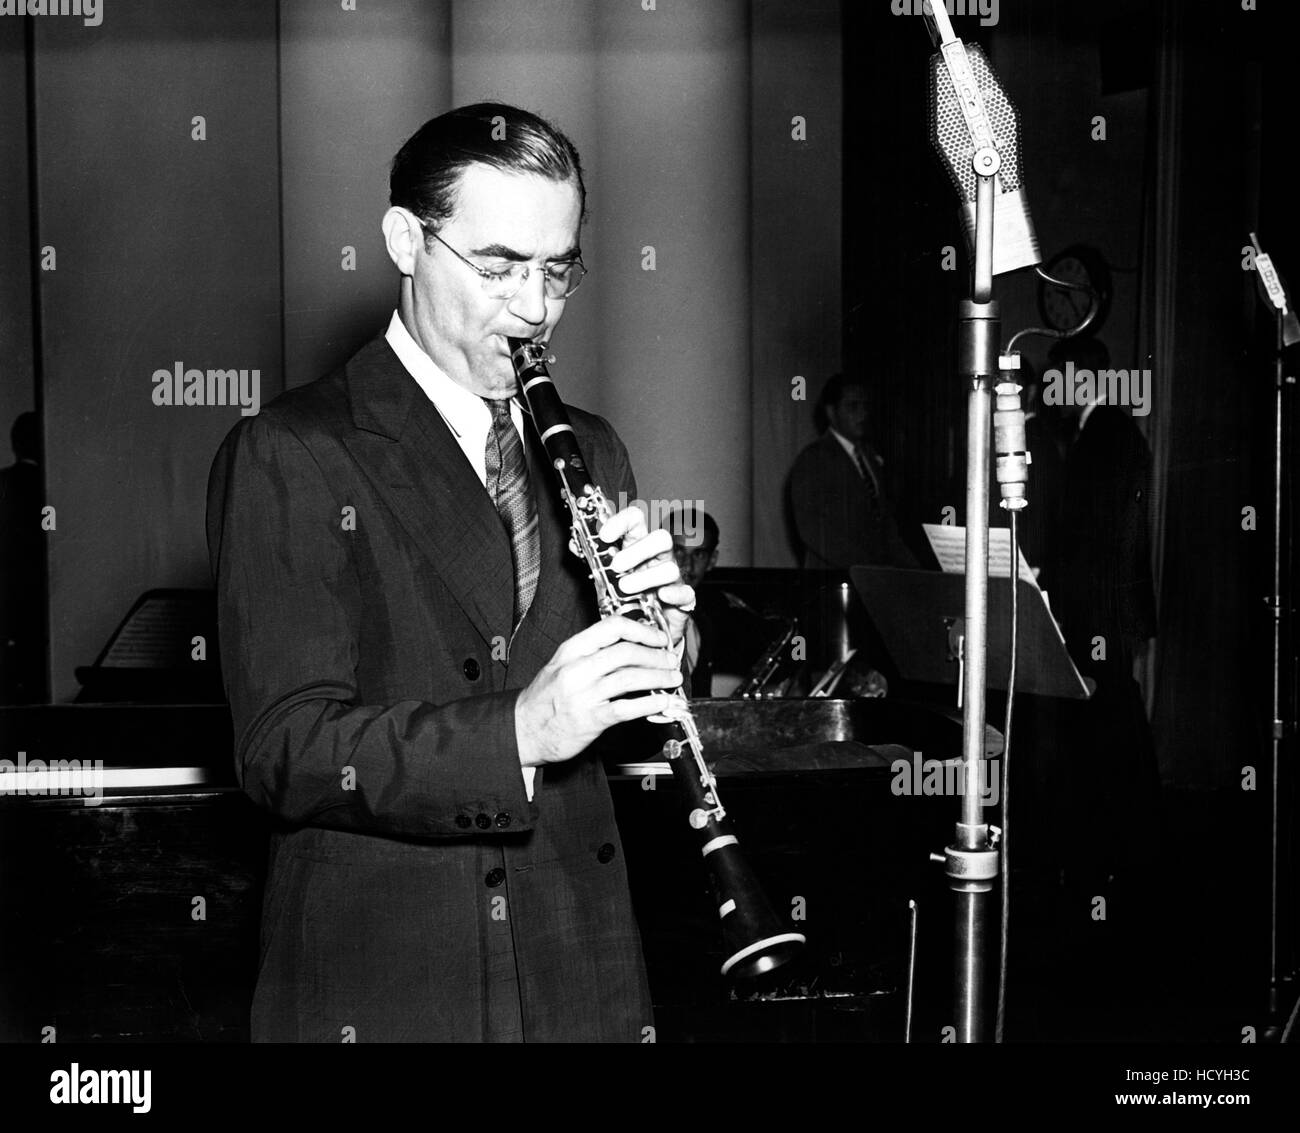 Benny Goodman-King of Swing-American Jazz Clarinetist-1946-5x7 Photo 